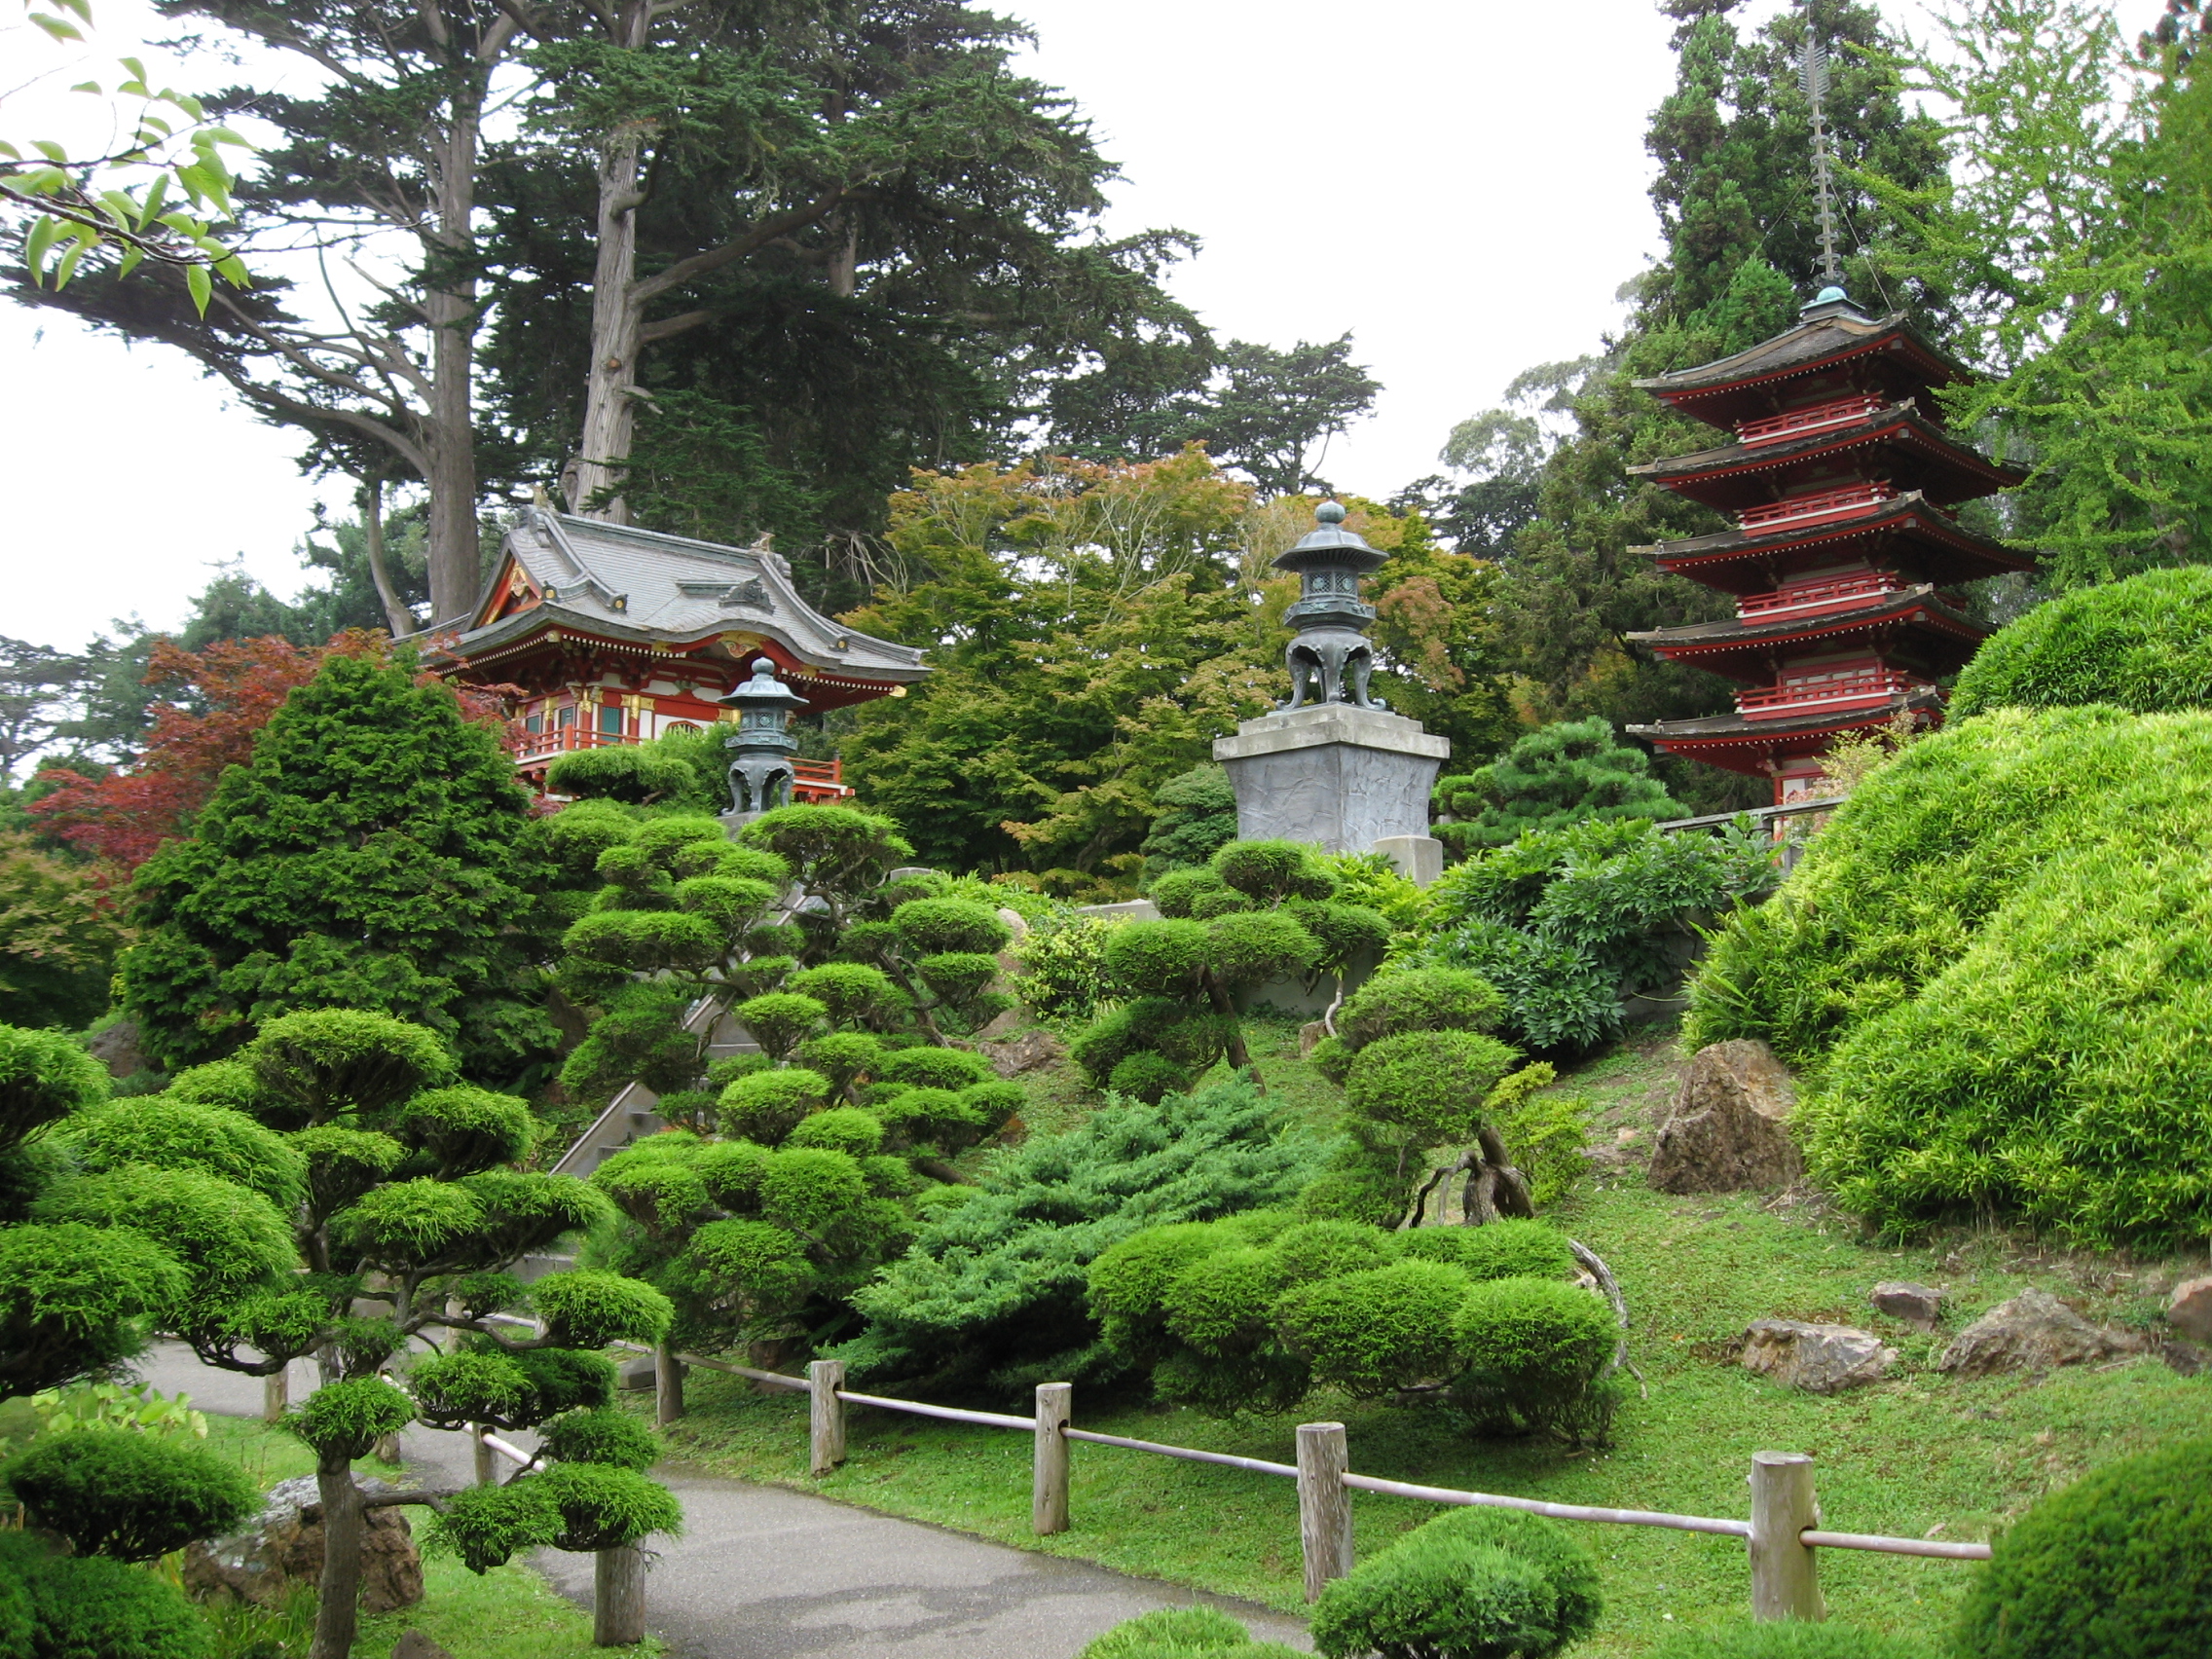 Plants In 2pics The Japanese Tea Garden In Golden Gate Park